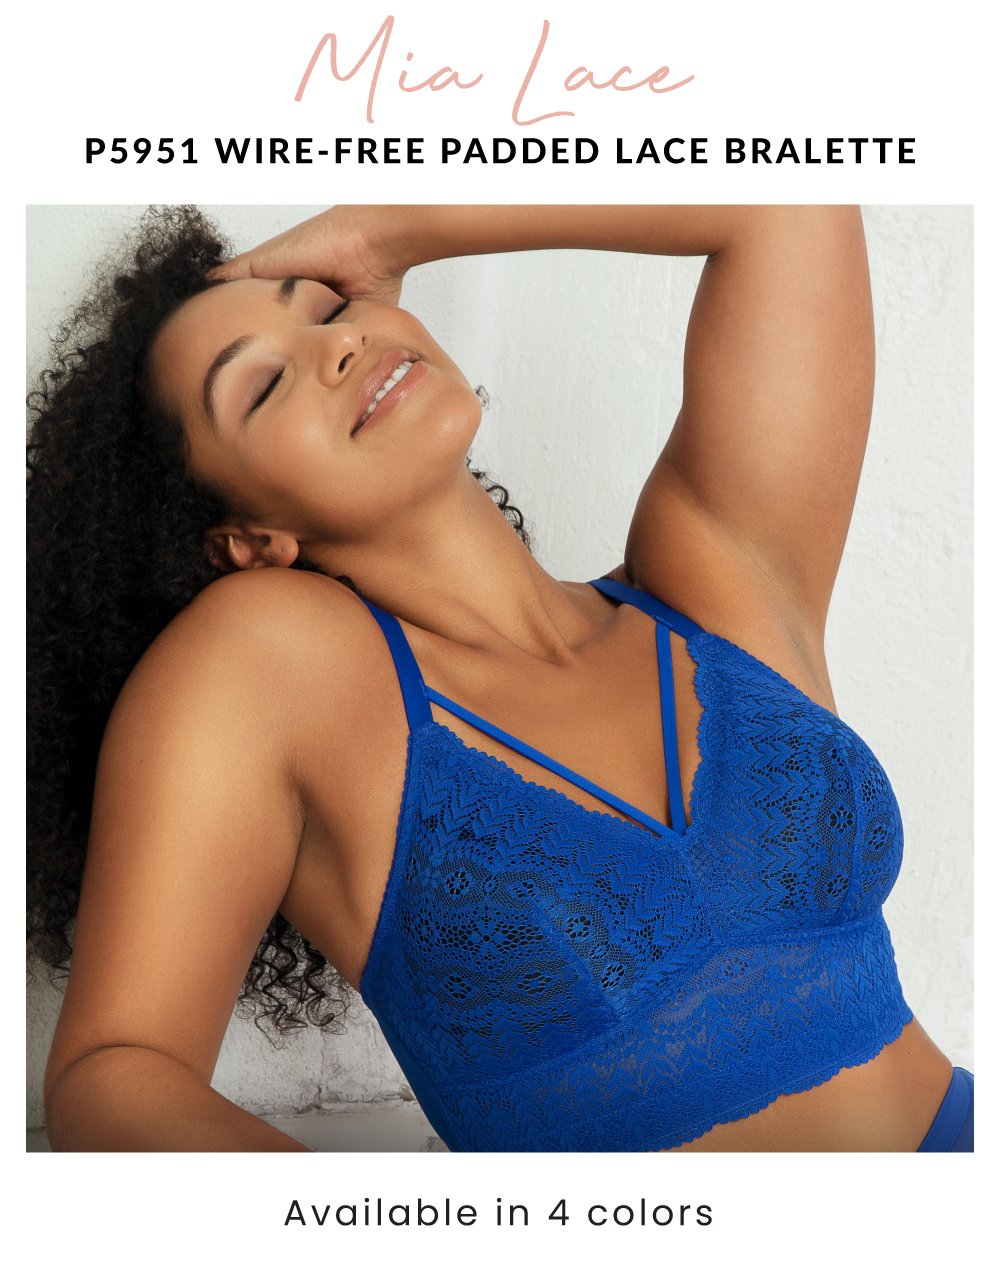 Parfait Lingerie: PARFAIT's # 1 Lace Wire-free Bra in Stunning